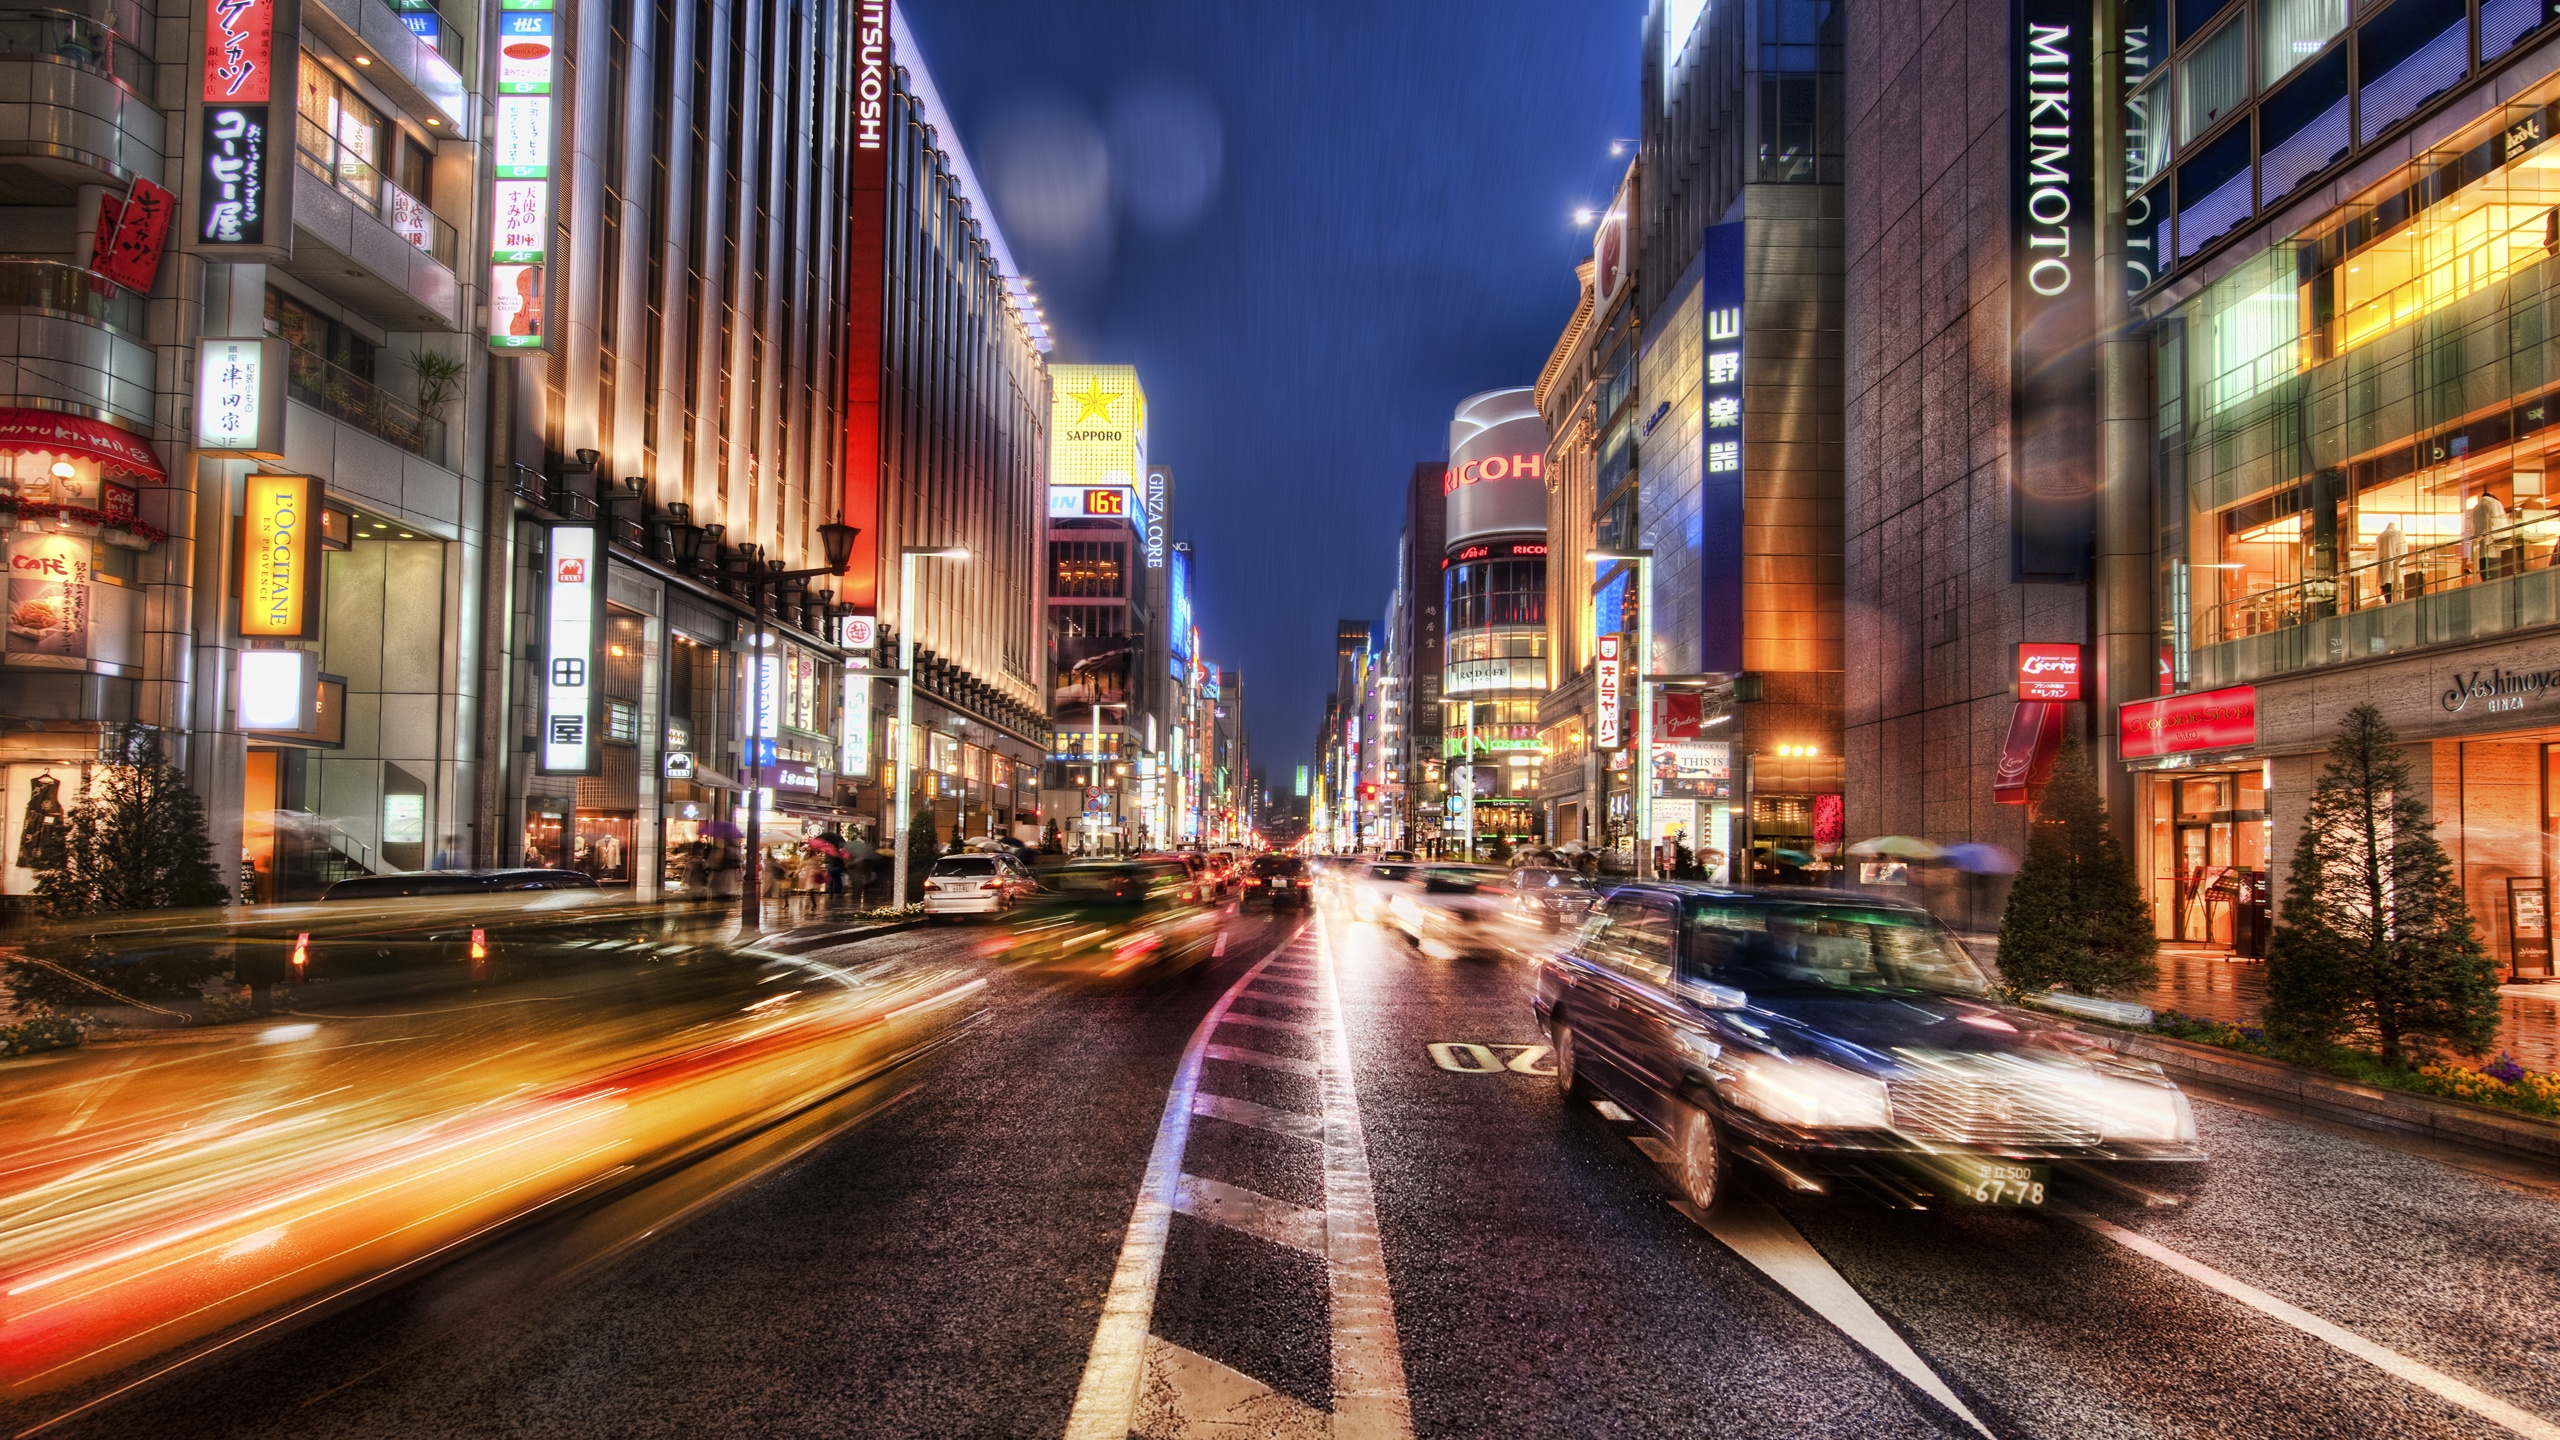 General 2560x1440 street Japan urban city long exposure traffic night city lights street light stores